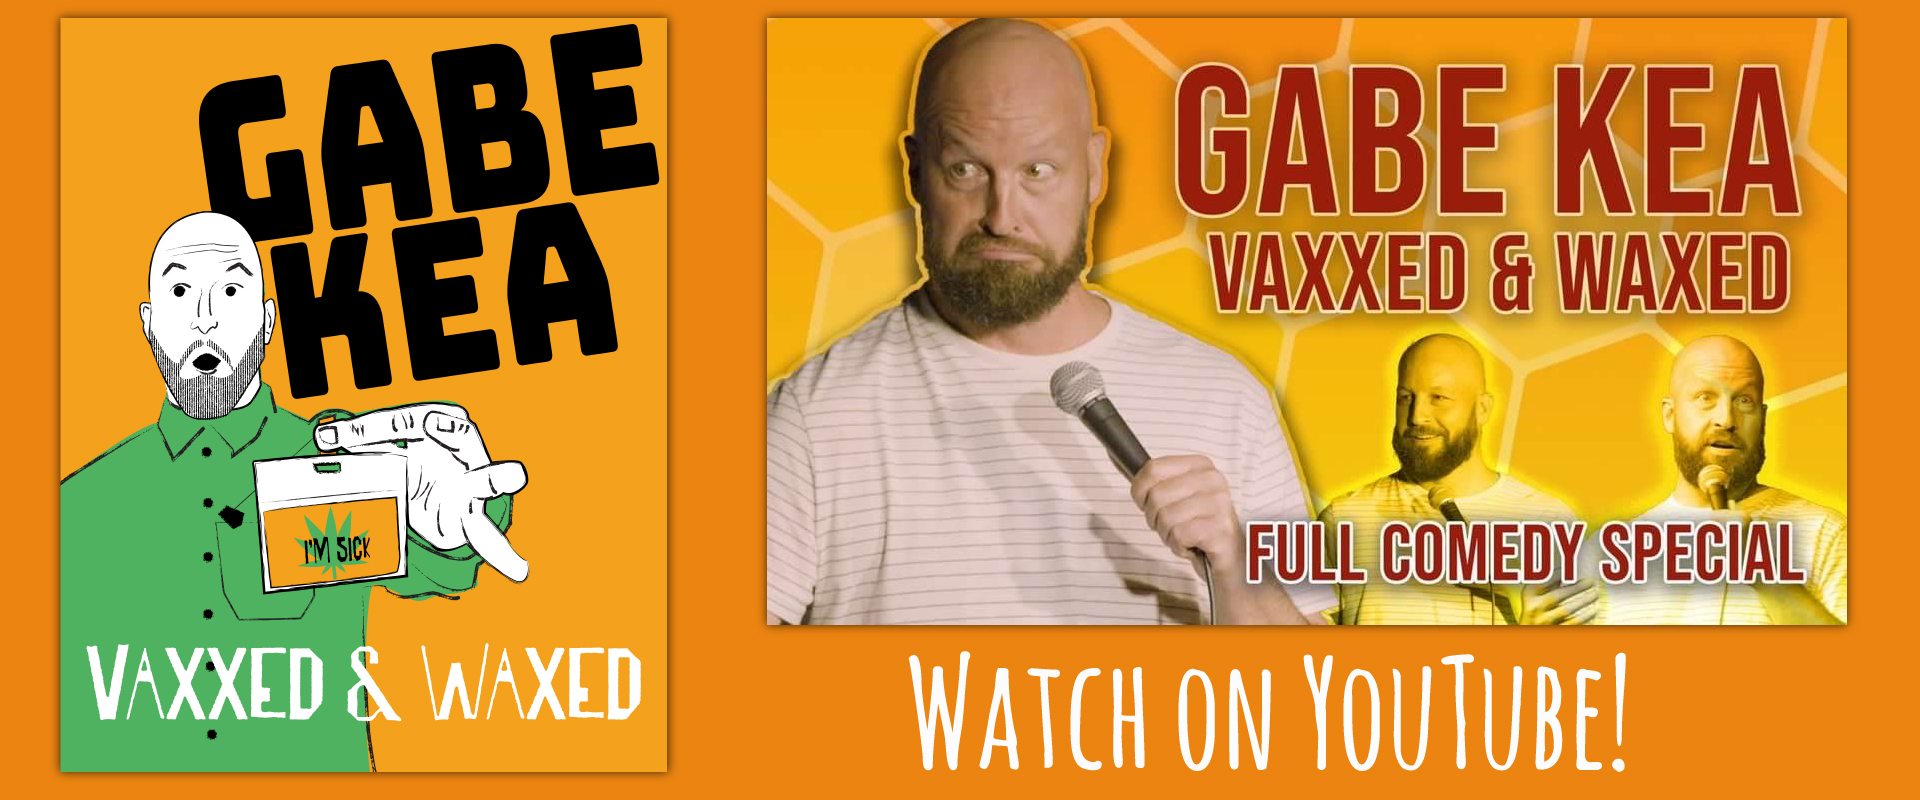 gabe kea vaxxed & waxed full comedy special watch on youtube